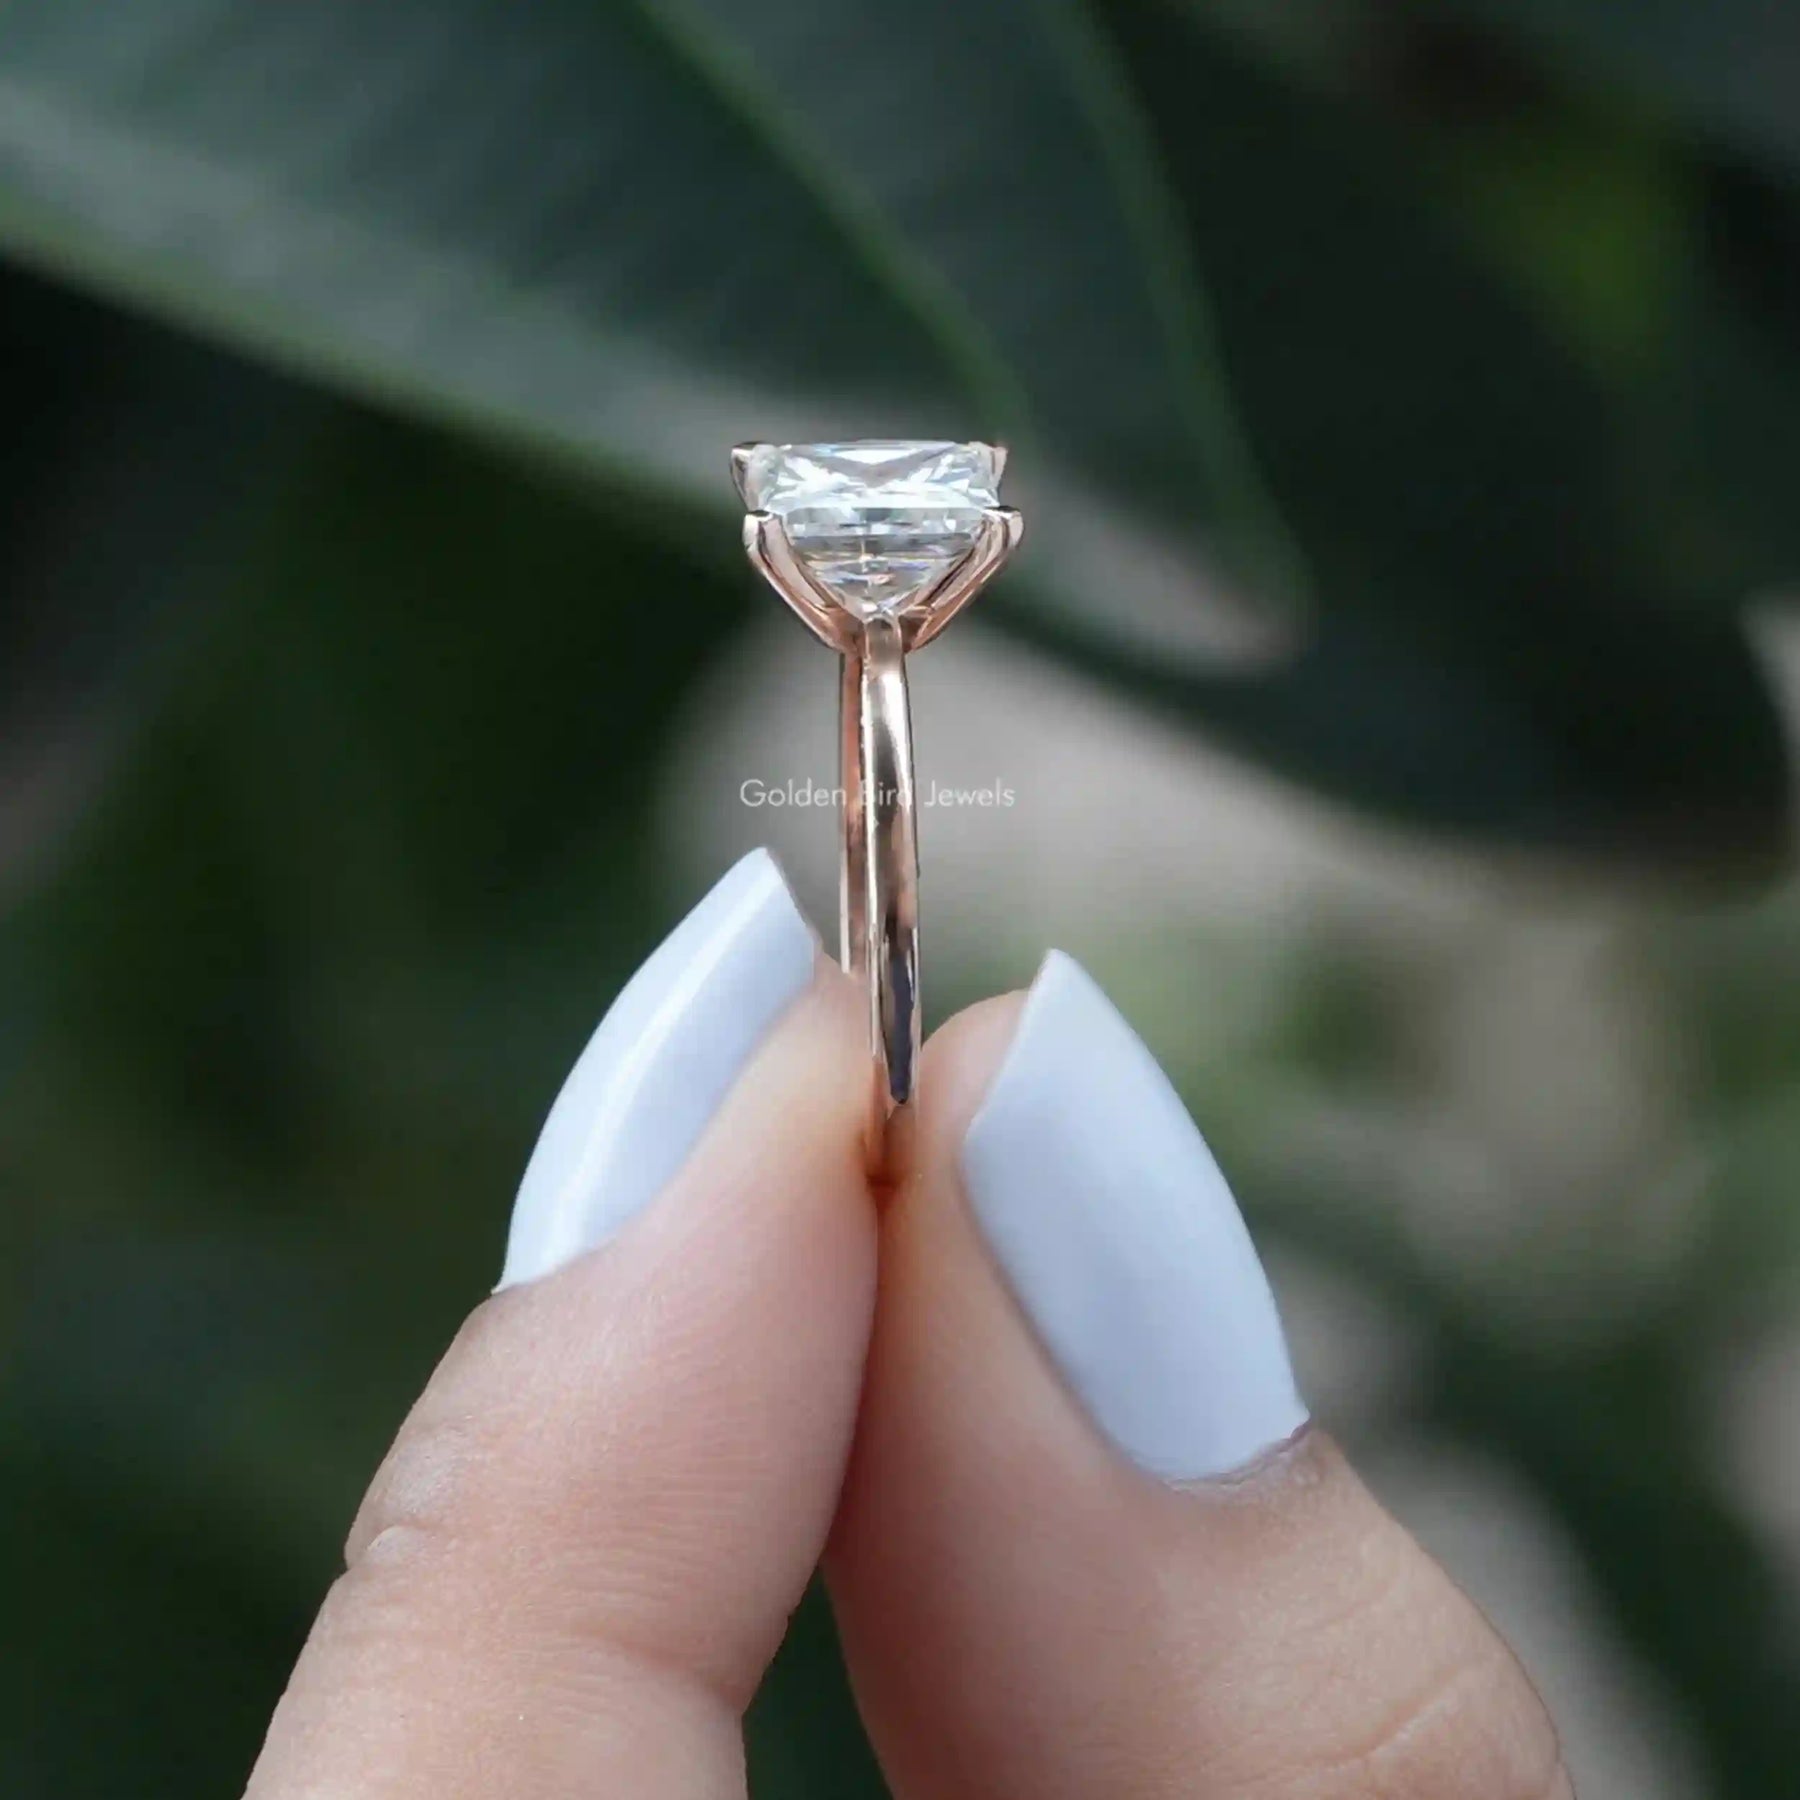 [Princess Cut Moissanite Engagement Ring Made Of 14k Yellow Gold]-[Golden Bird Jewels]